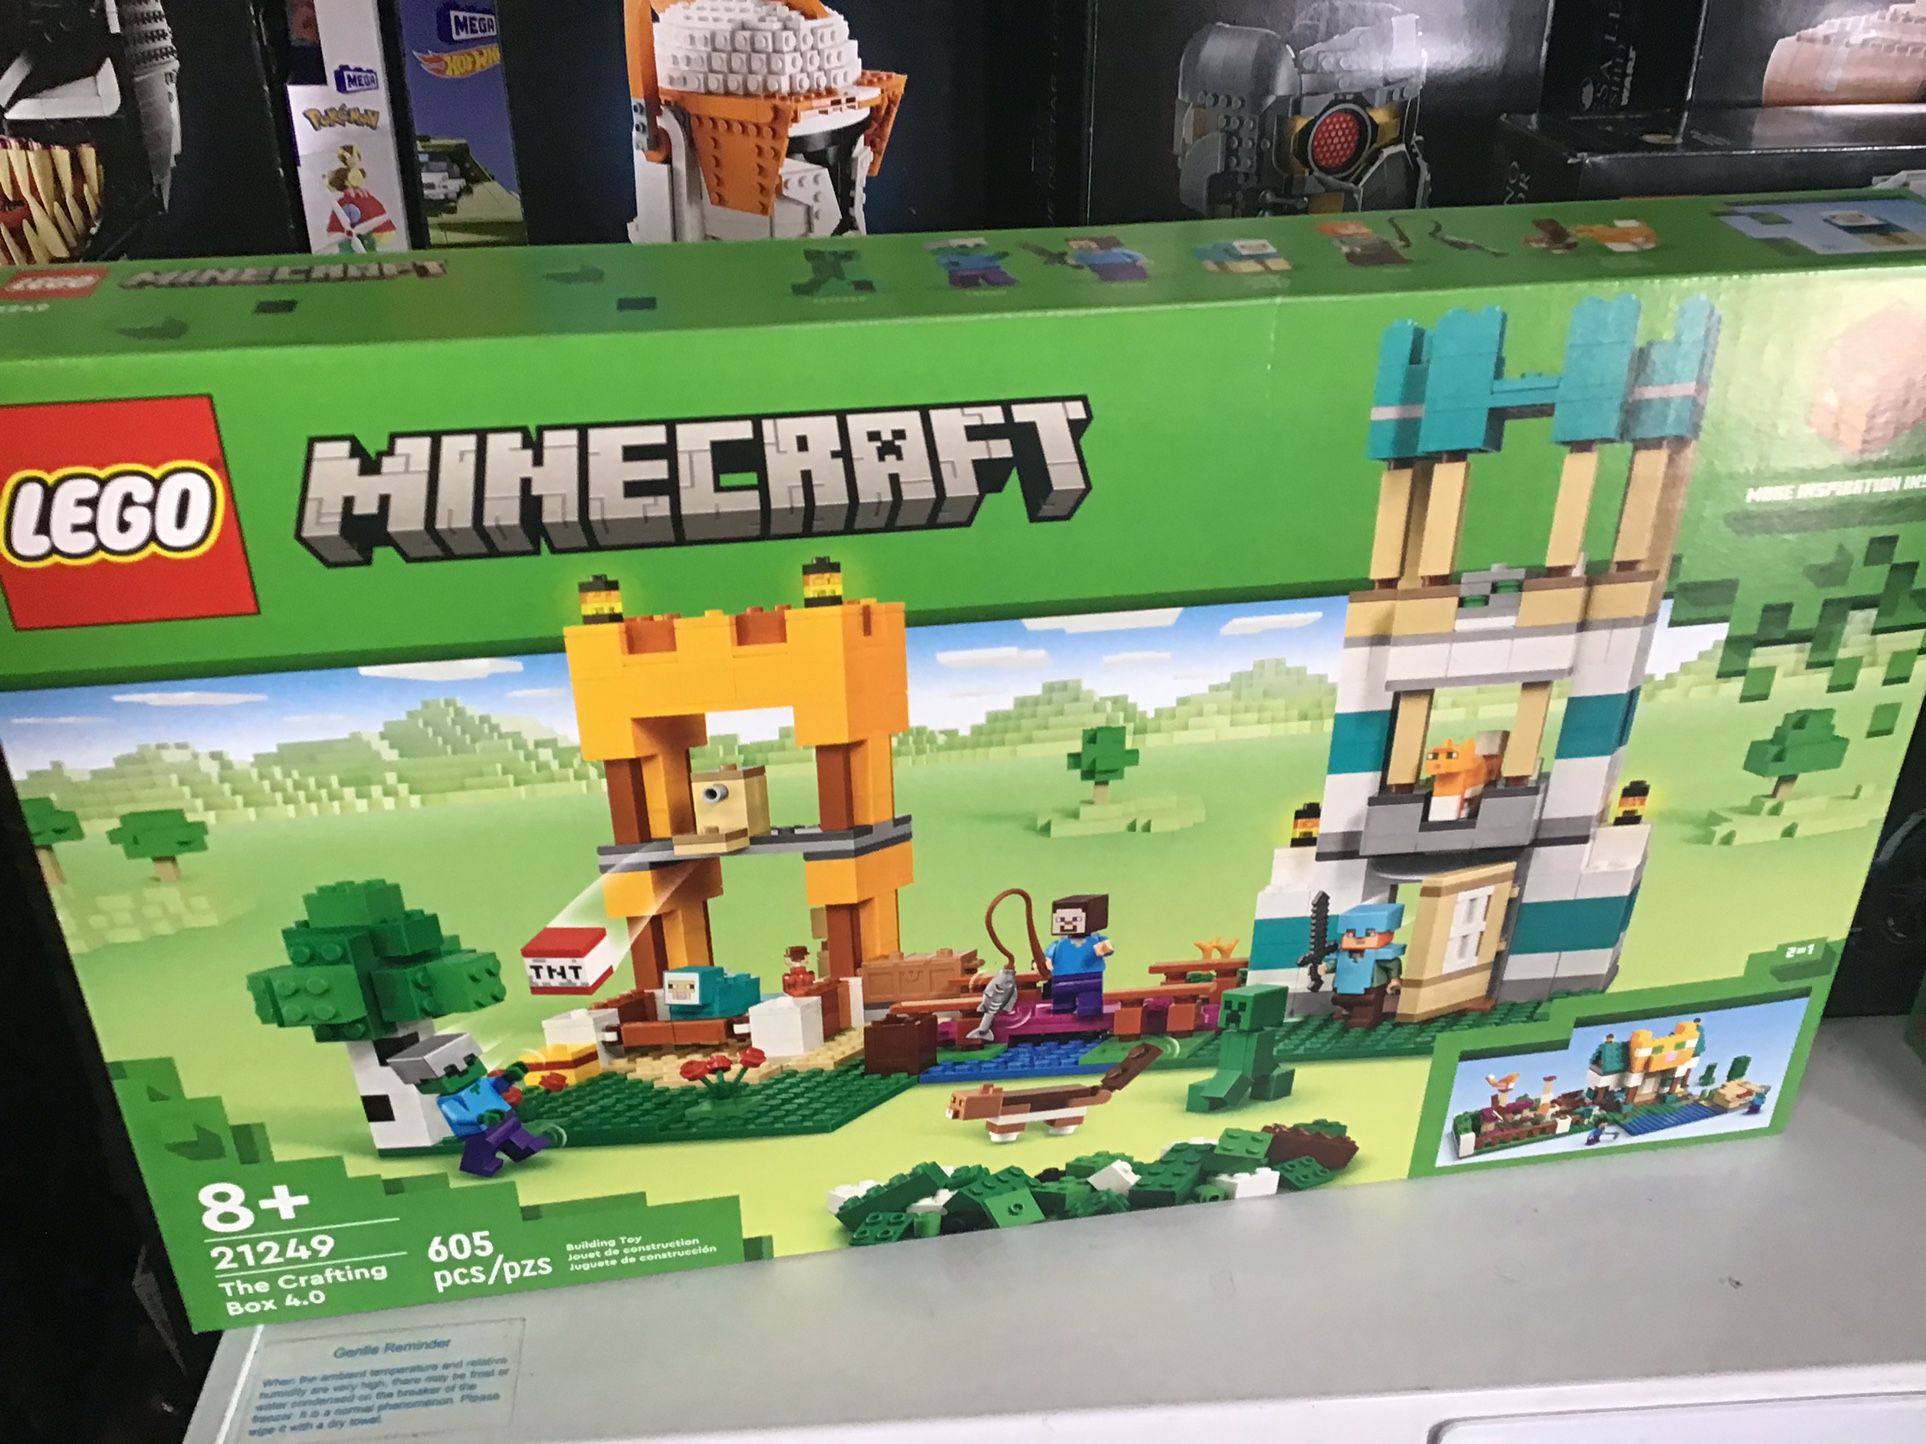 Lego Minecraft 21249 for Sale in San Diego, CA - OfferUp